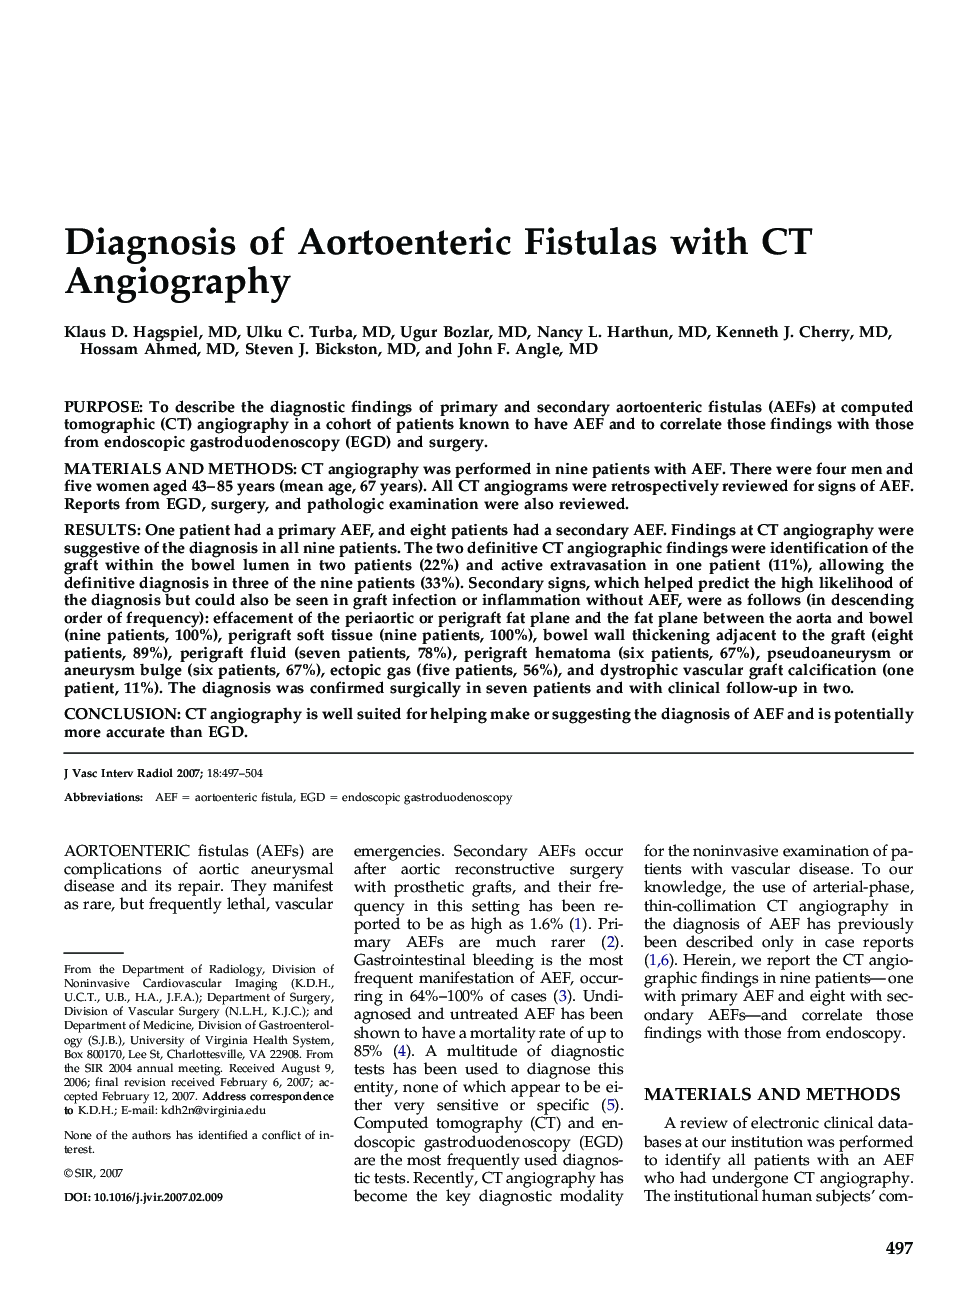 Diagnosis of Aortoenteric Fistulas with CT Angiography